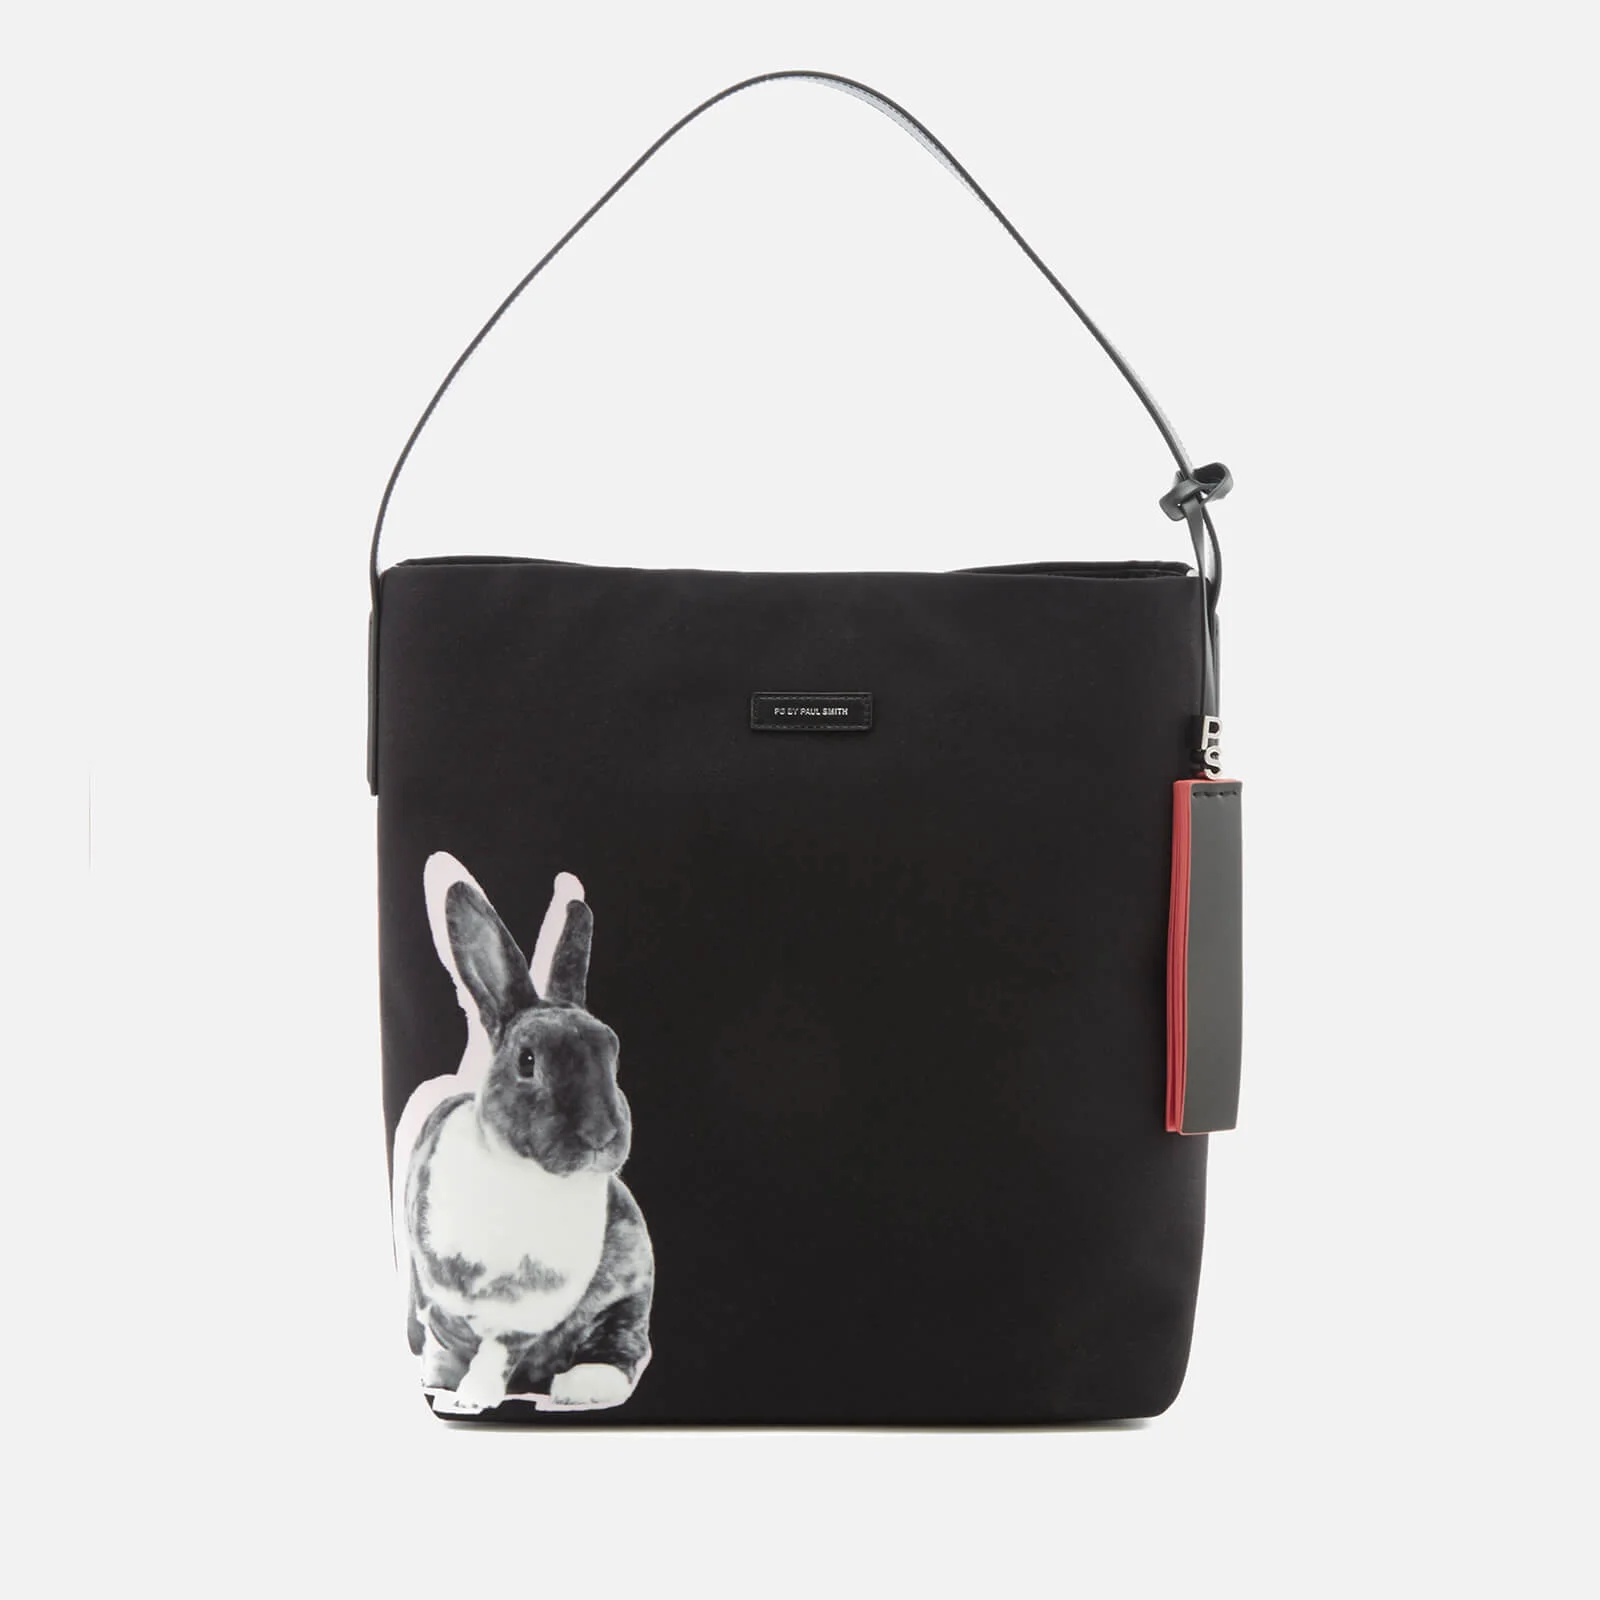 Paul Smith Women's Hobo Rabbit Bag - Black Image 1